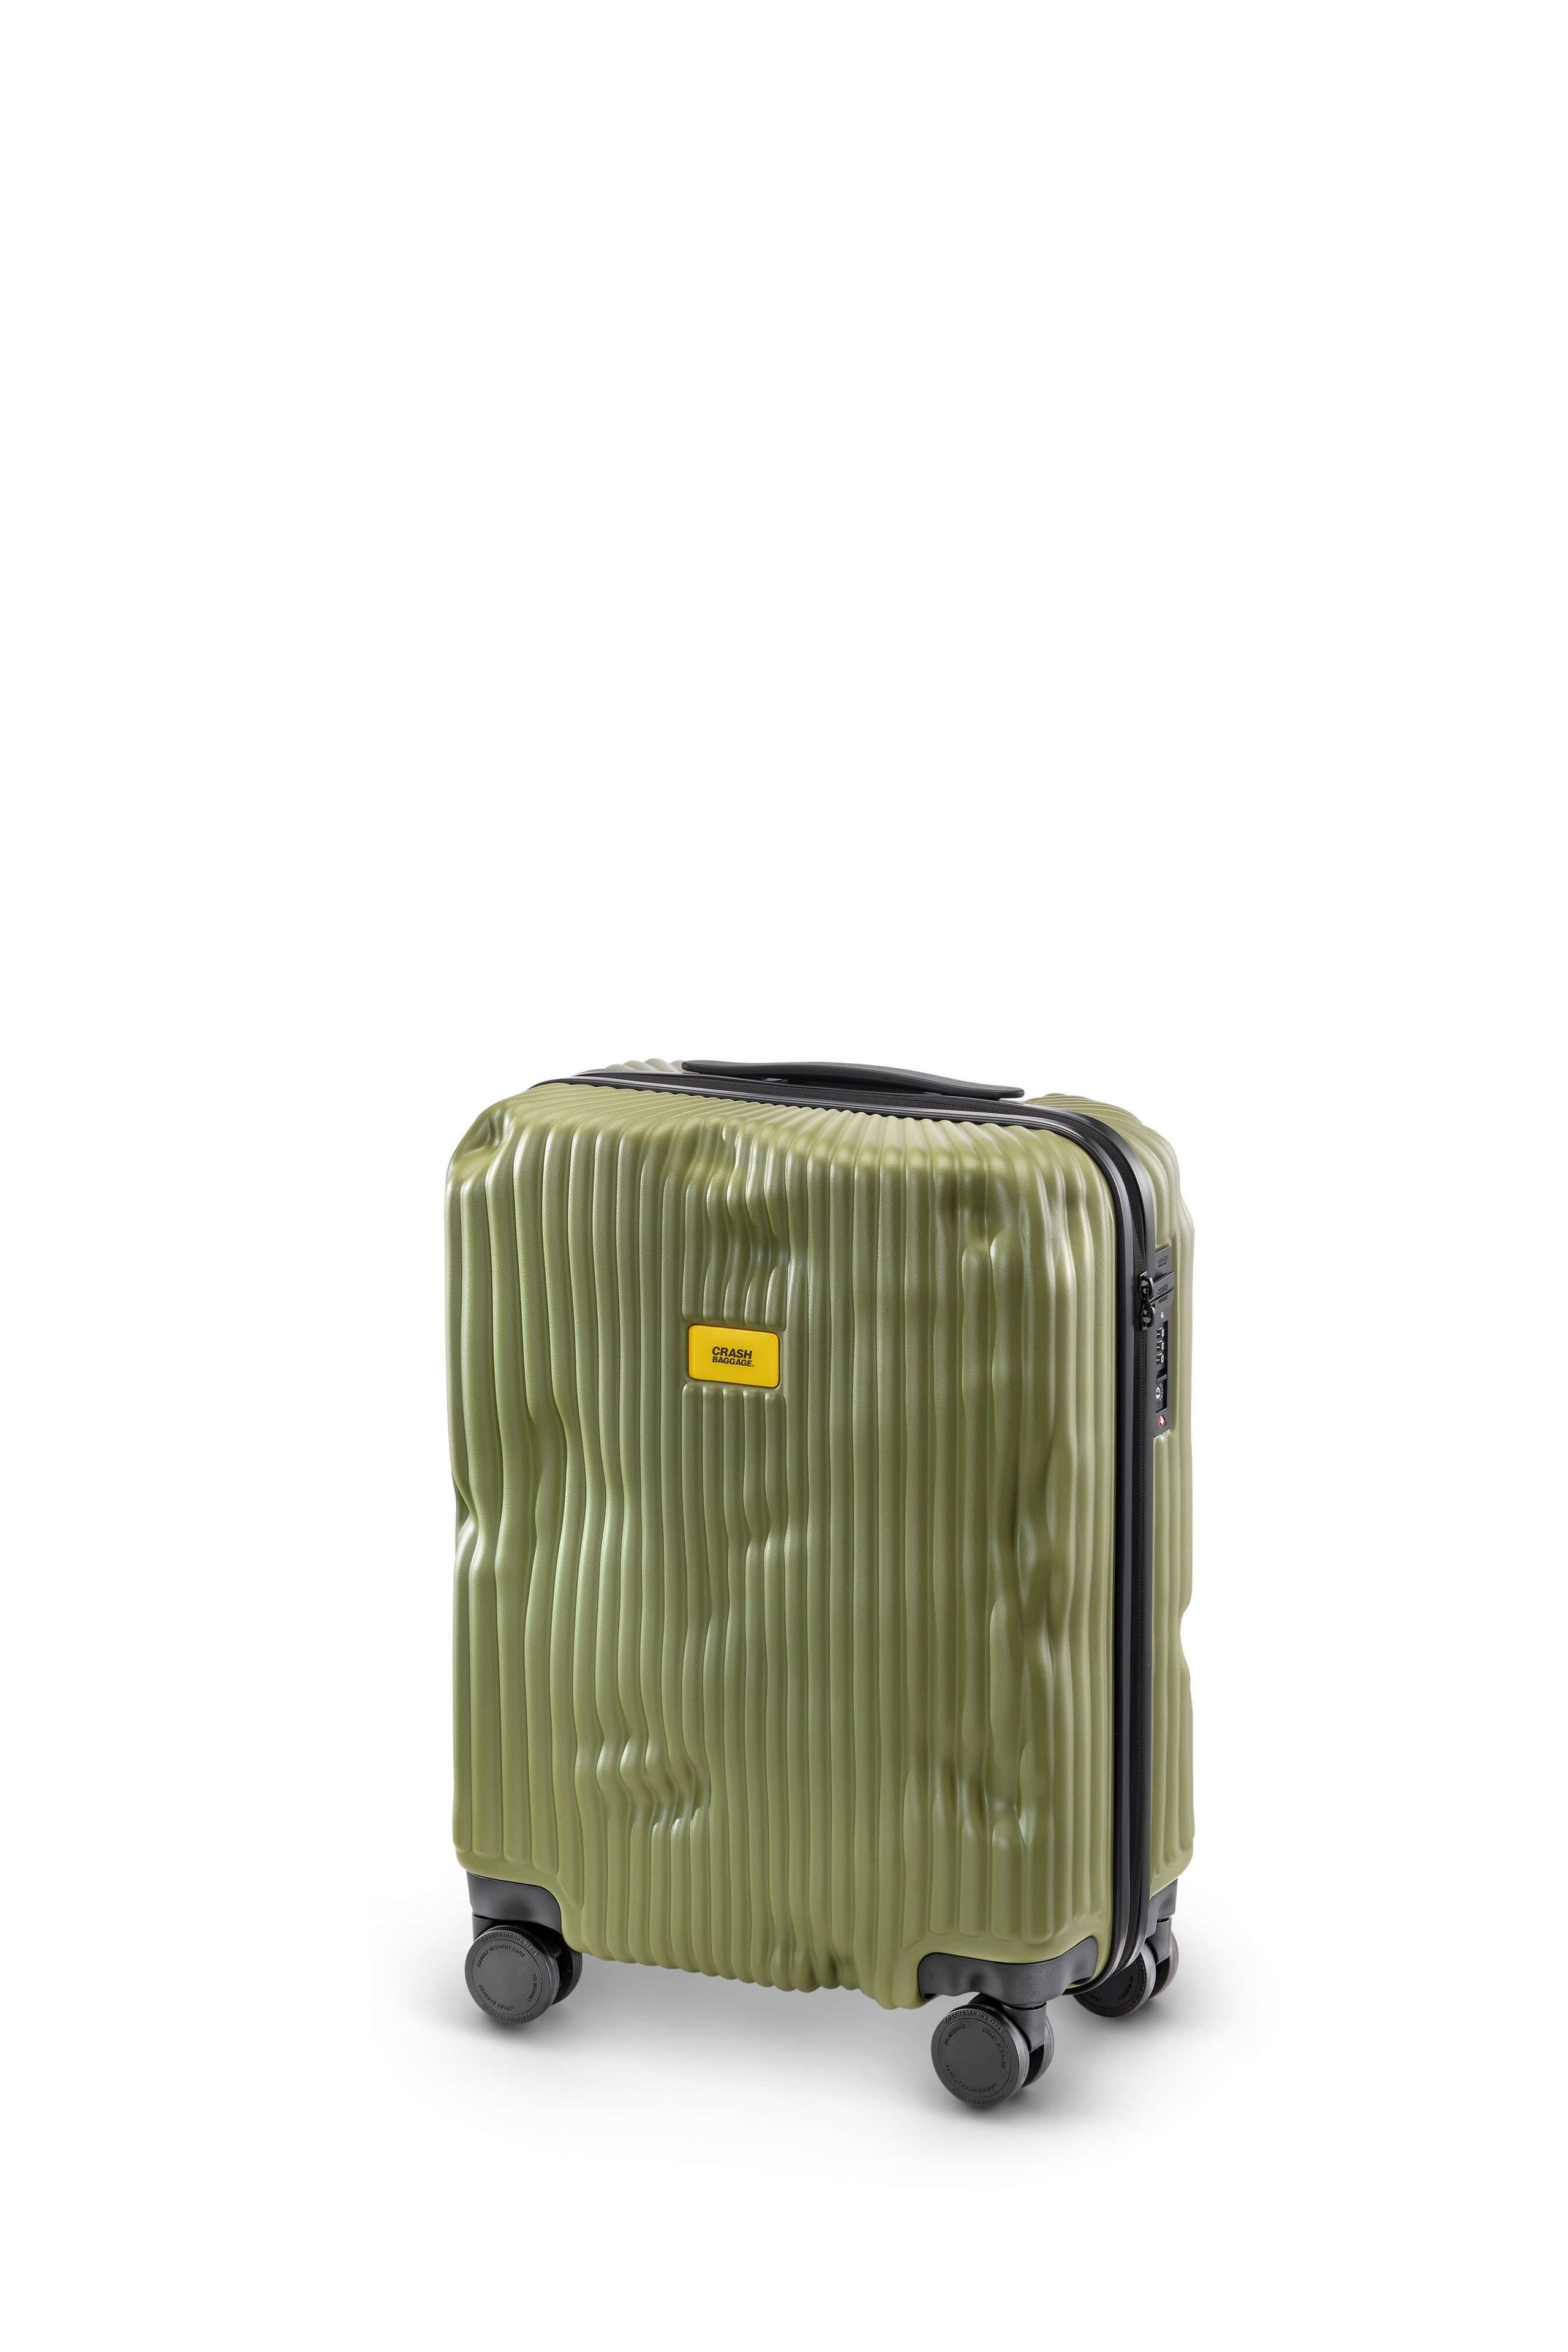 Crash Baggage - STRIPE - OLIVE GREEN